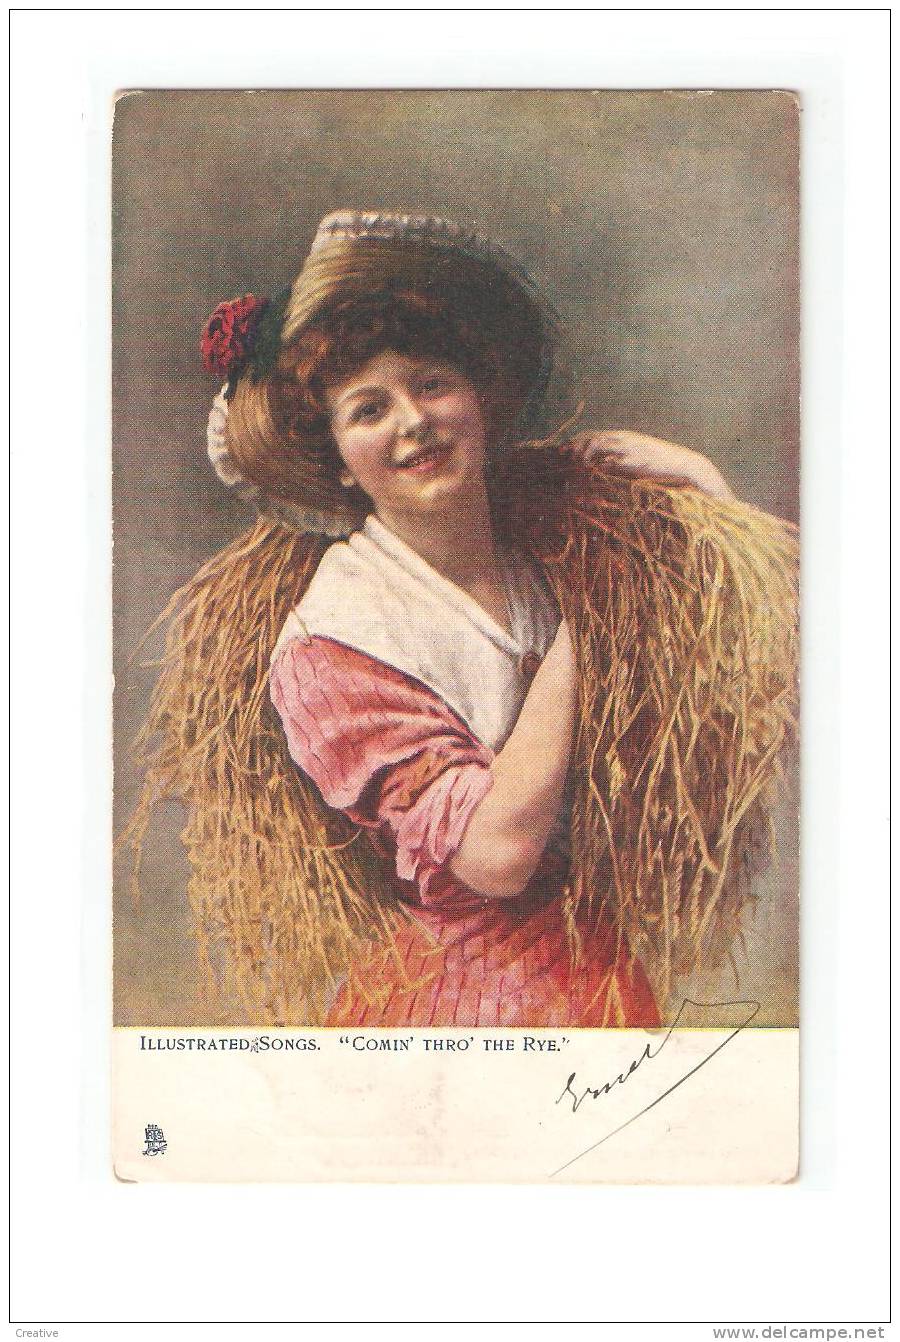 1904 ILLUSTRADED SONGS."Comin Thro The Rye".Raphael Tuck & Sons 1904 - Tuck, Raphael